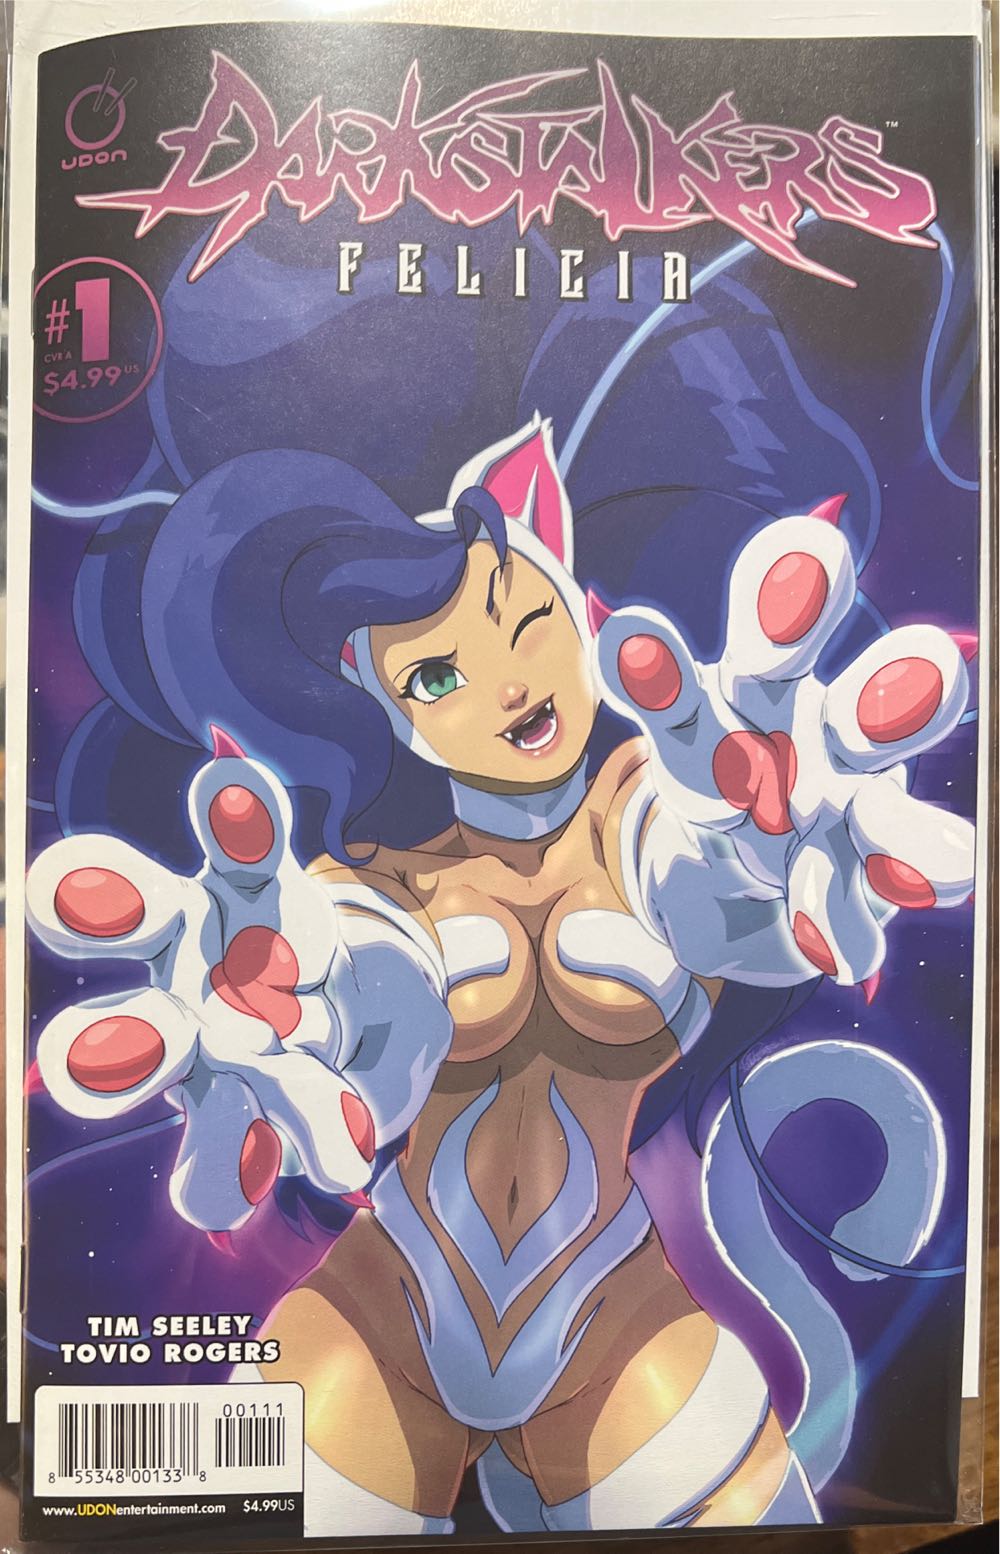 Darkstalkers Felicia - Udon (1 - Apr 2023) comic book collectible [Barcode 85534800133800111] - Main Image 1